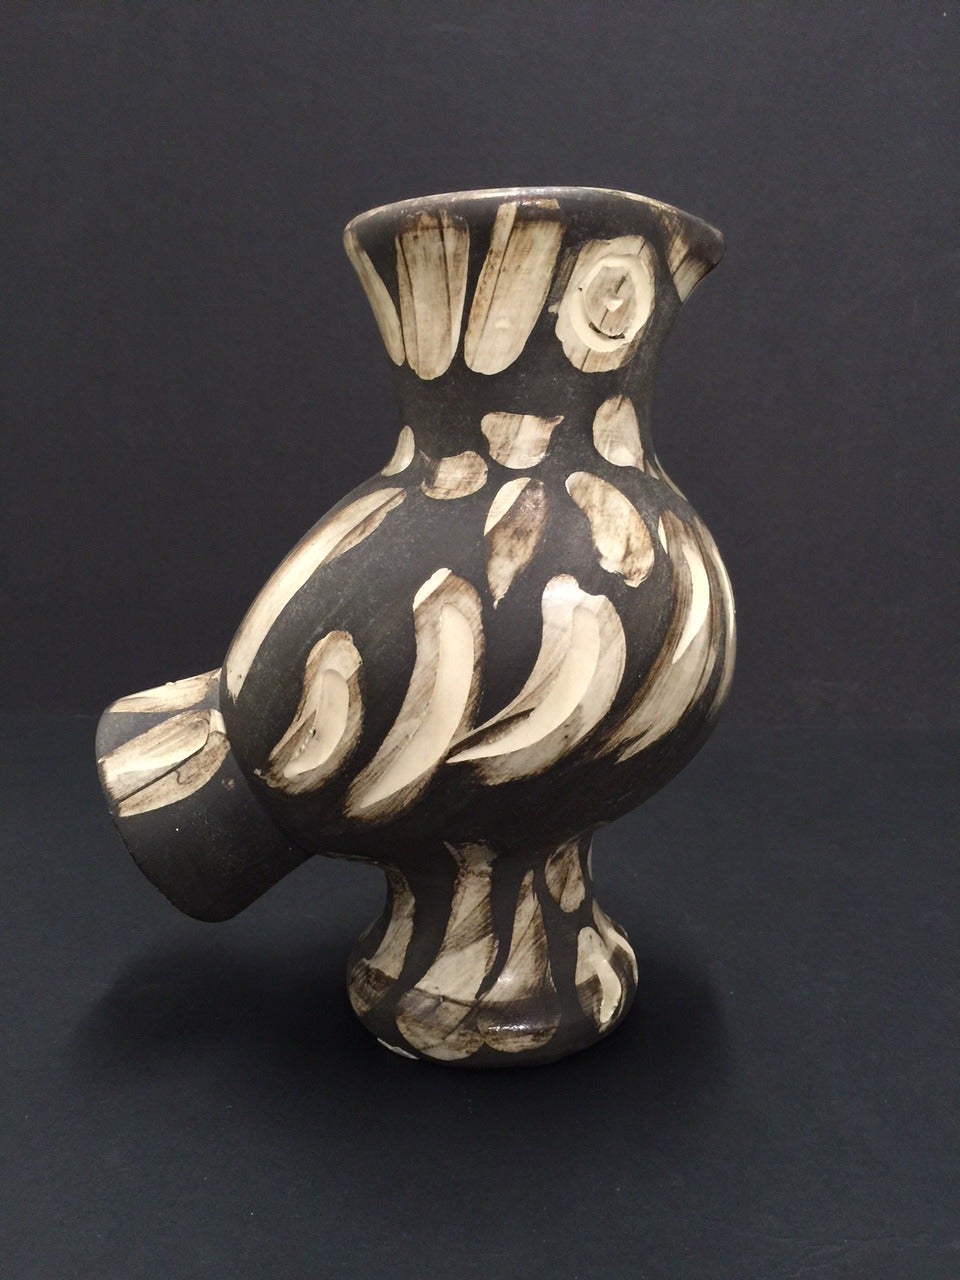 Picasso Ceramics: Chouette (AR 605) - Modern Sculpture by Pablo Picasso